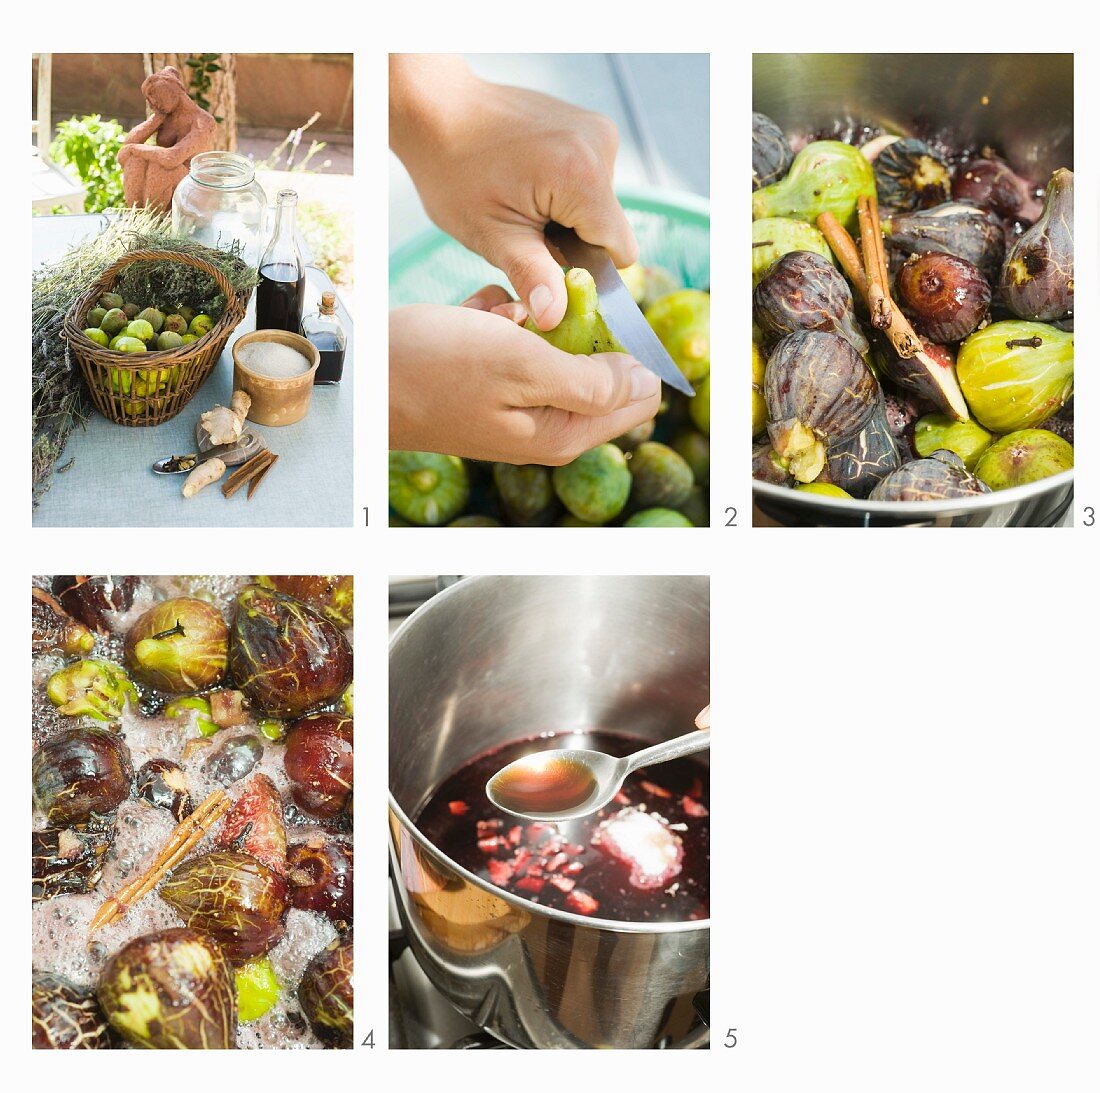 Preparare i fichi al balsamico (Balsamicofeigen zubereiten)